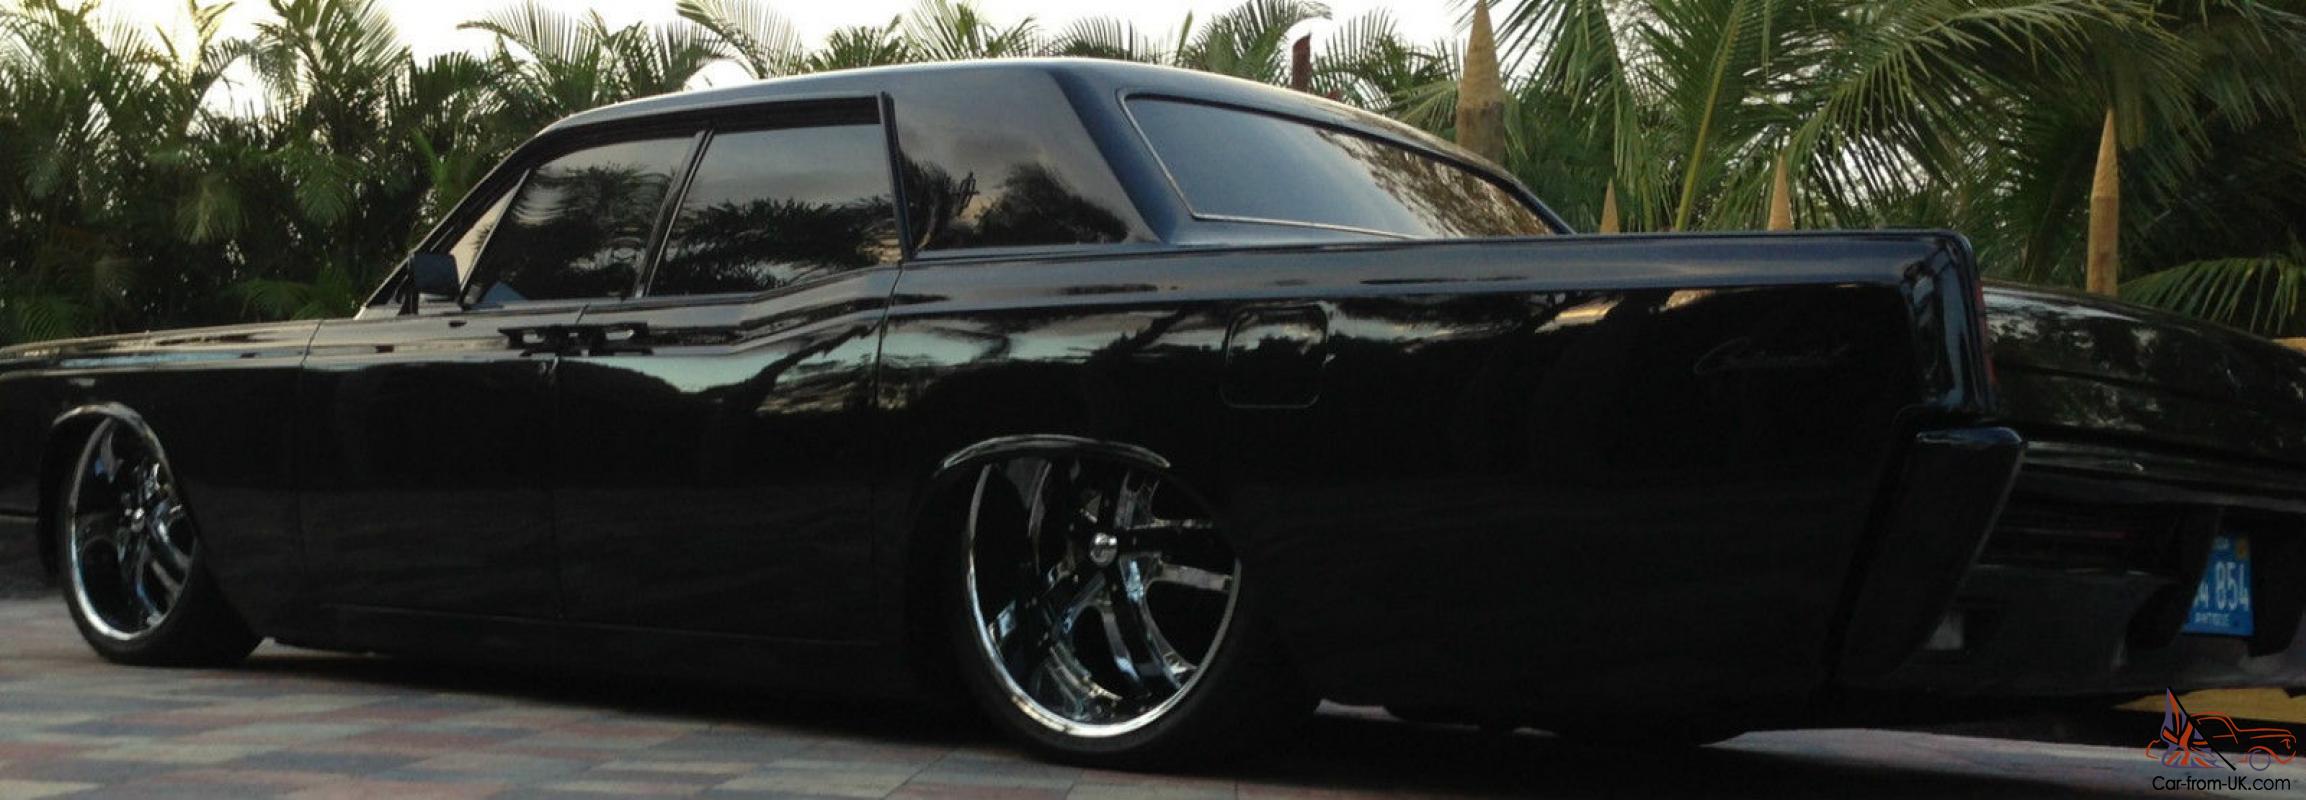 1967 Lincoln Continental Sedan All Black 22" Rims Air Ride Suspension